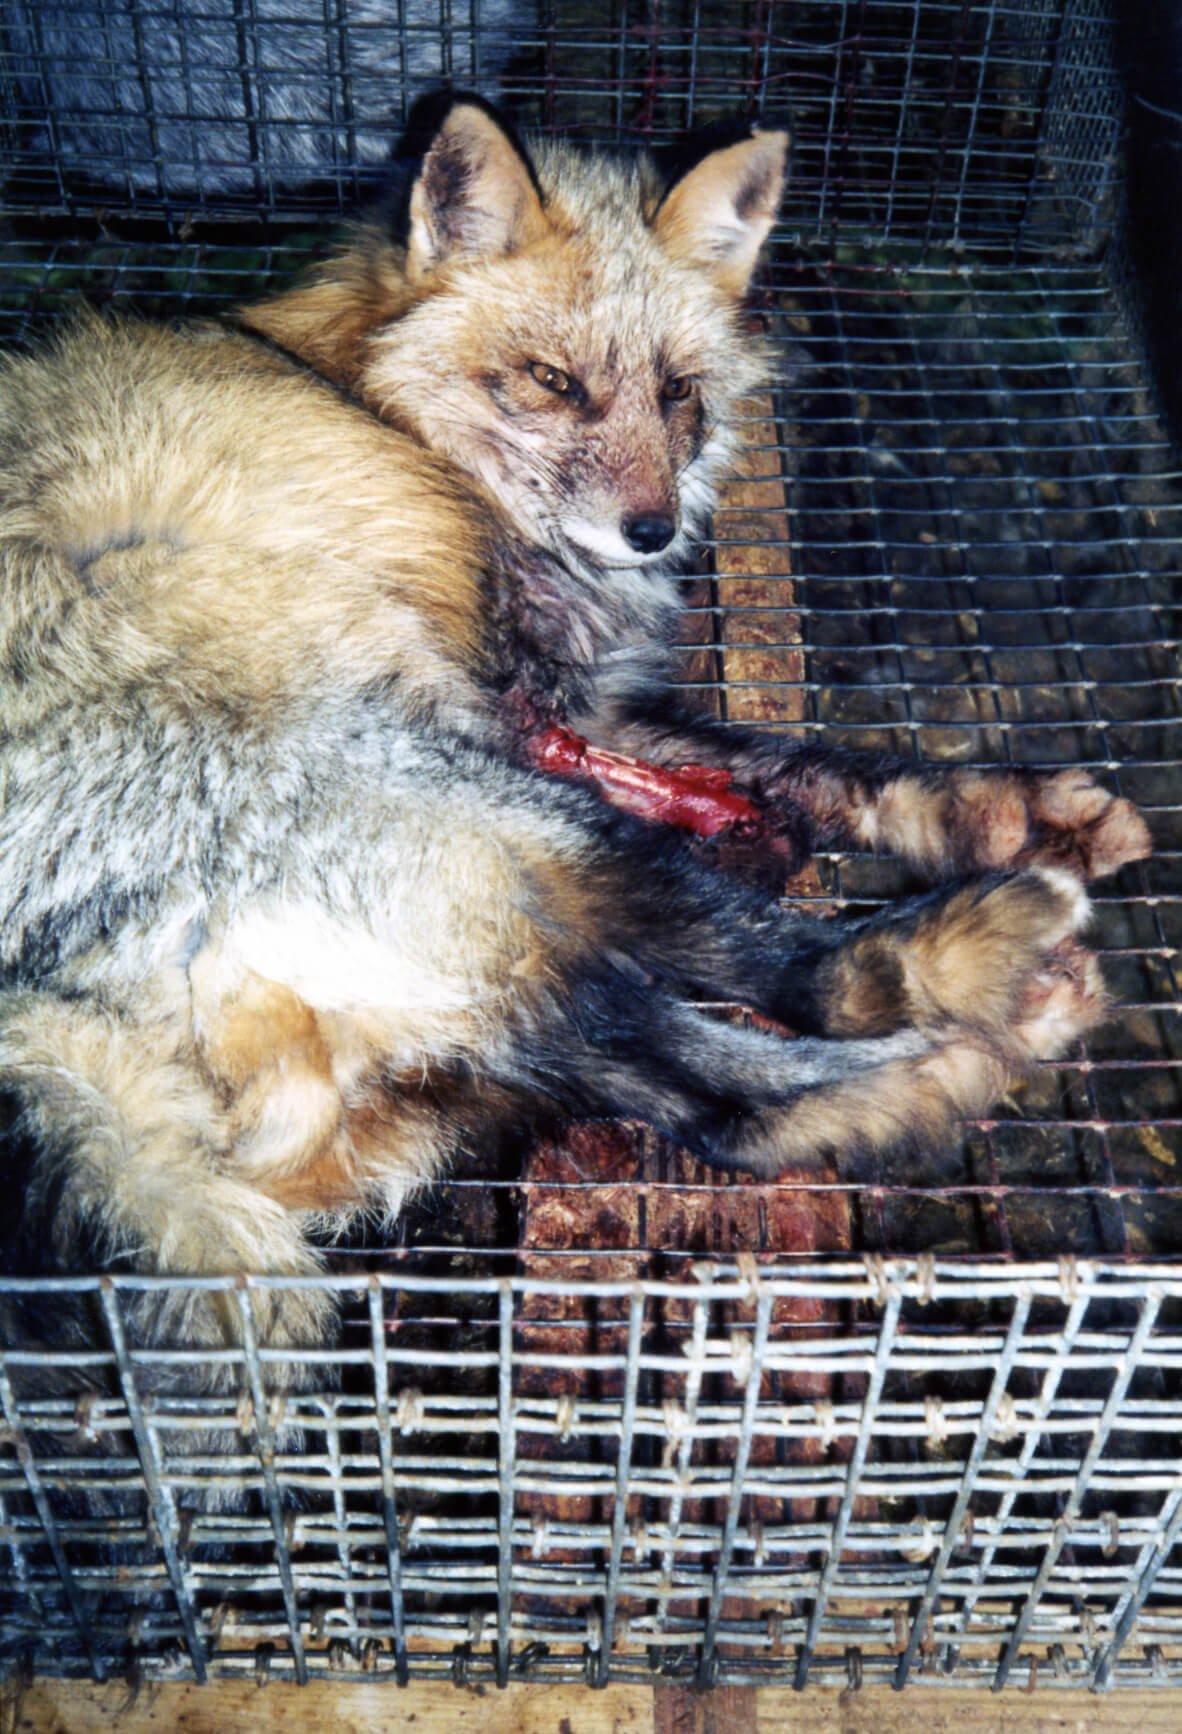 Animals Used for Fur | PETA